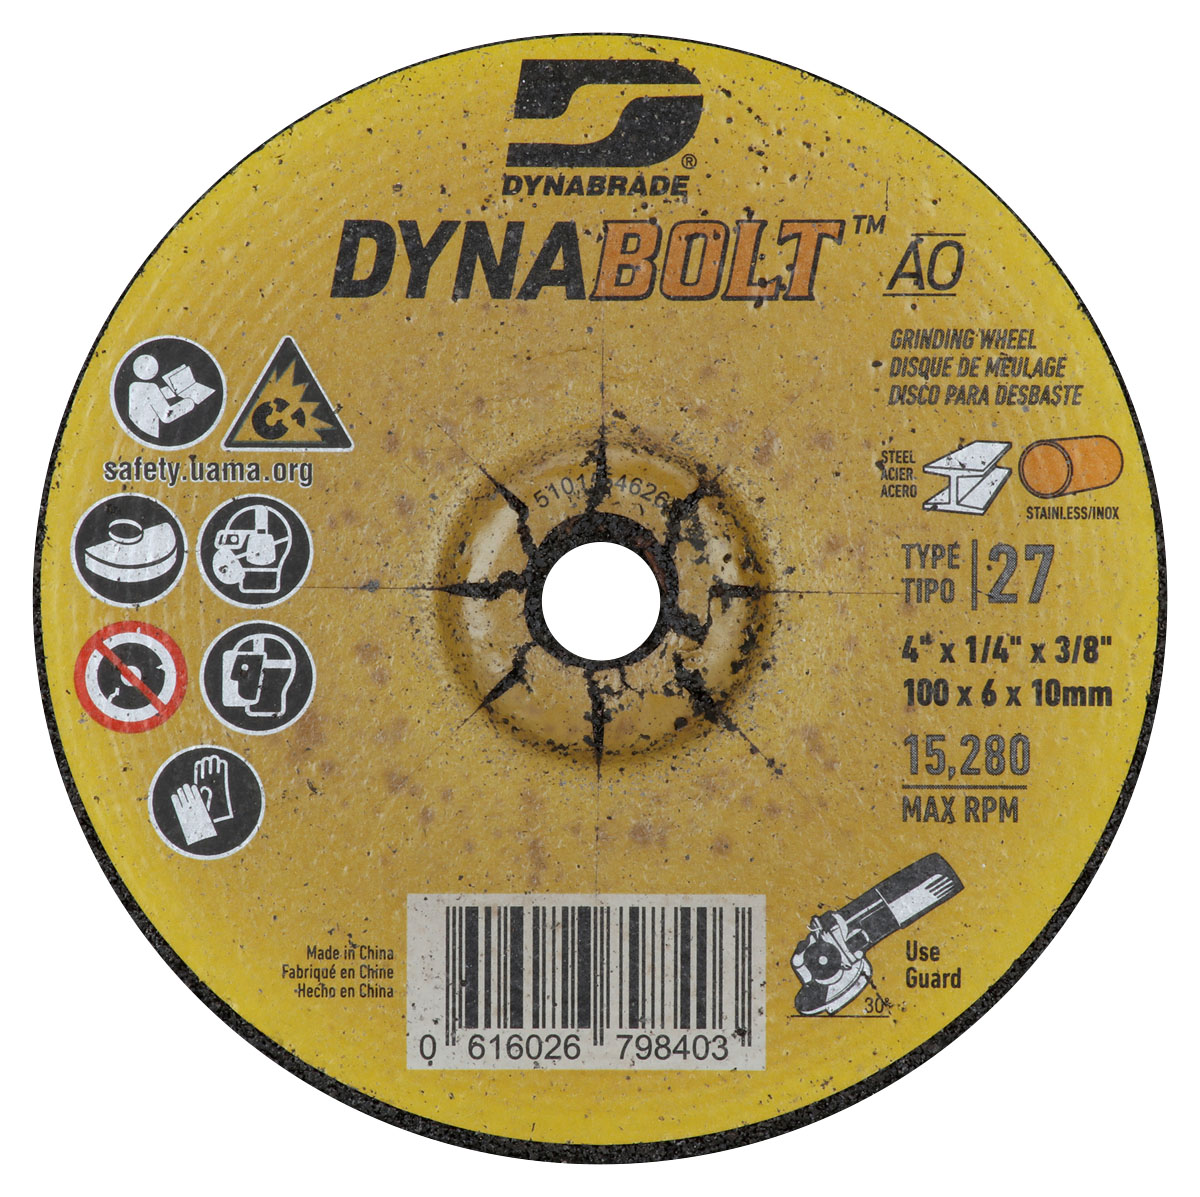 DynaBolt AO 4" x 1/4" x 3/8" T27 Grinding Wheel